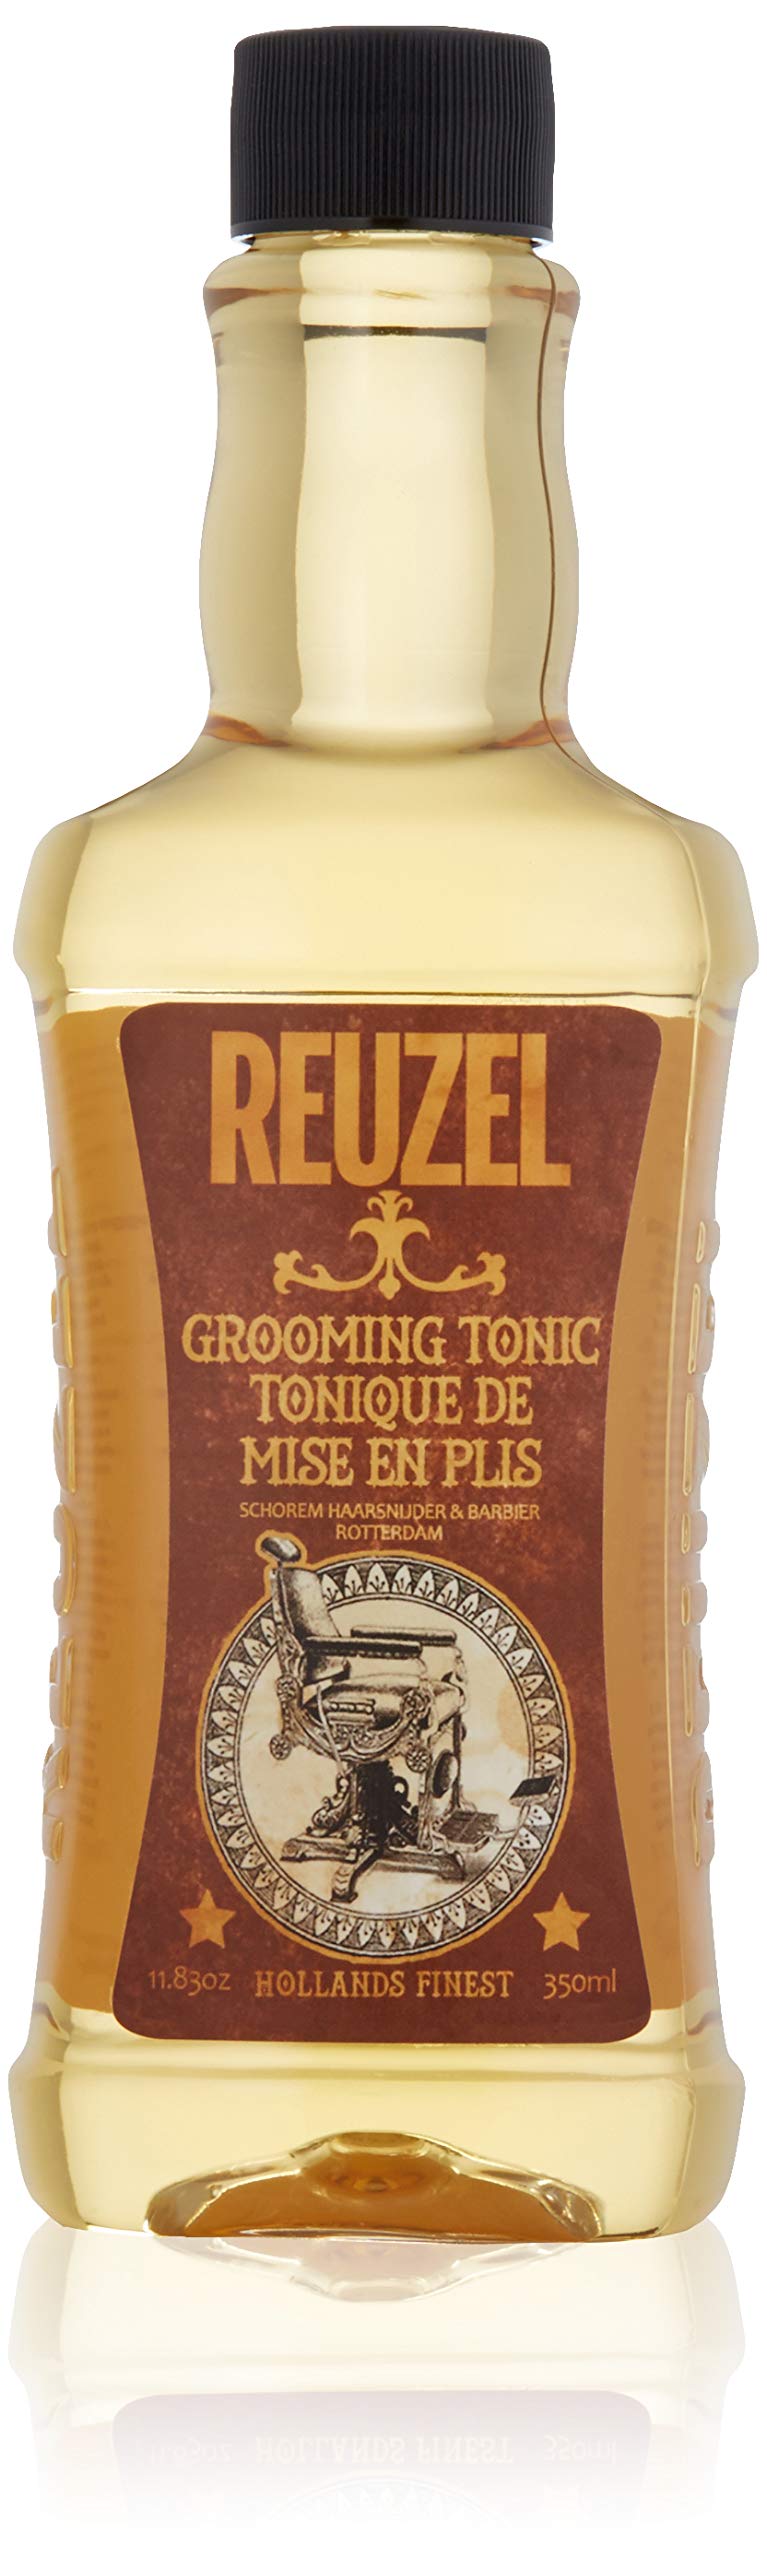 фото Тоник для укладки волос reuzel grooming tonic 350 мл